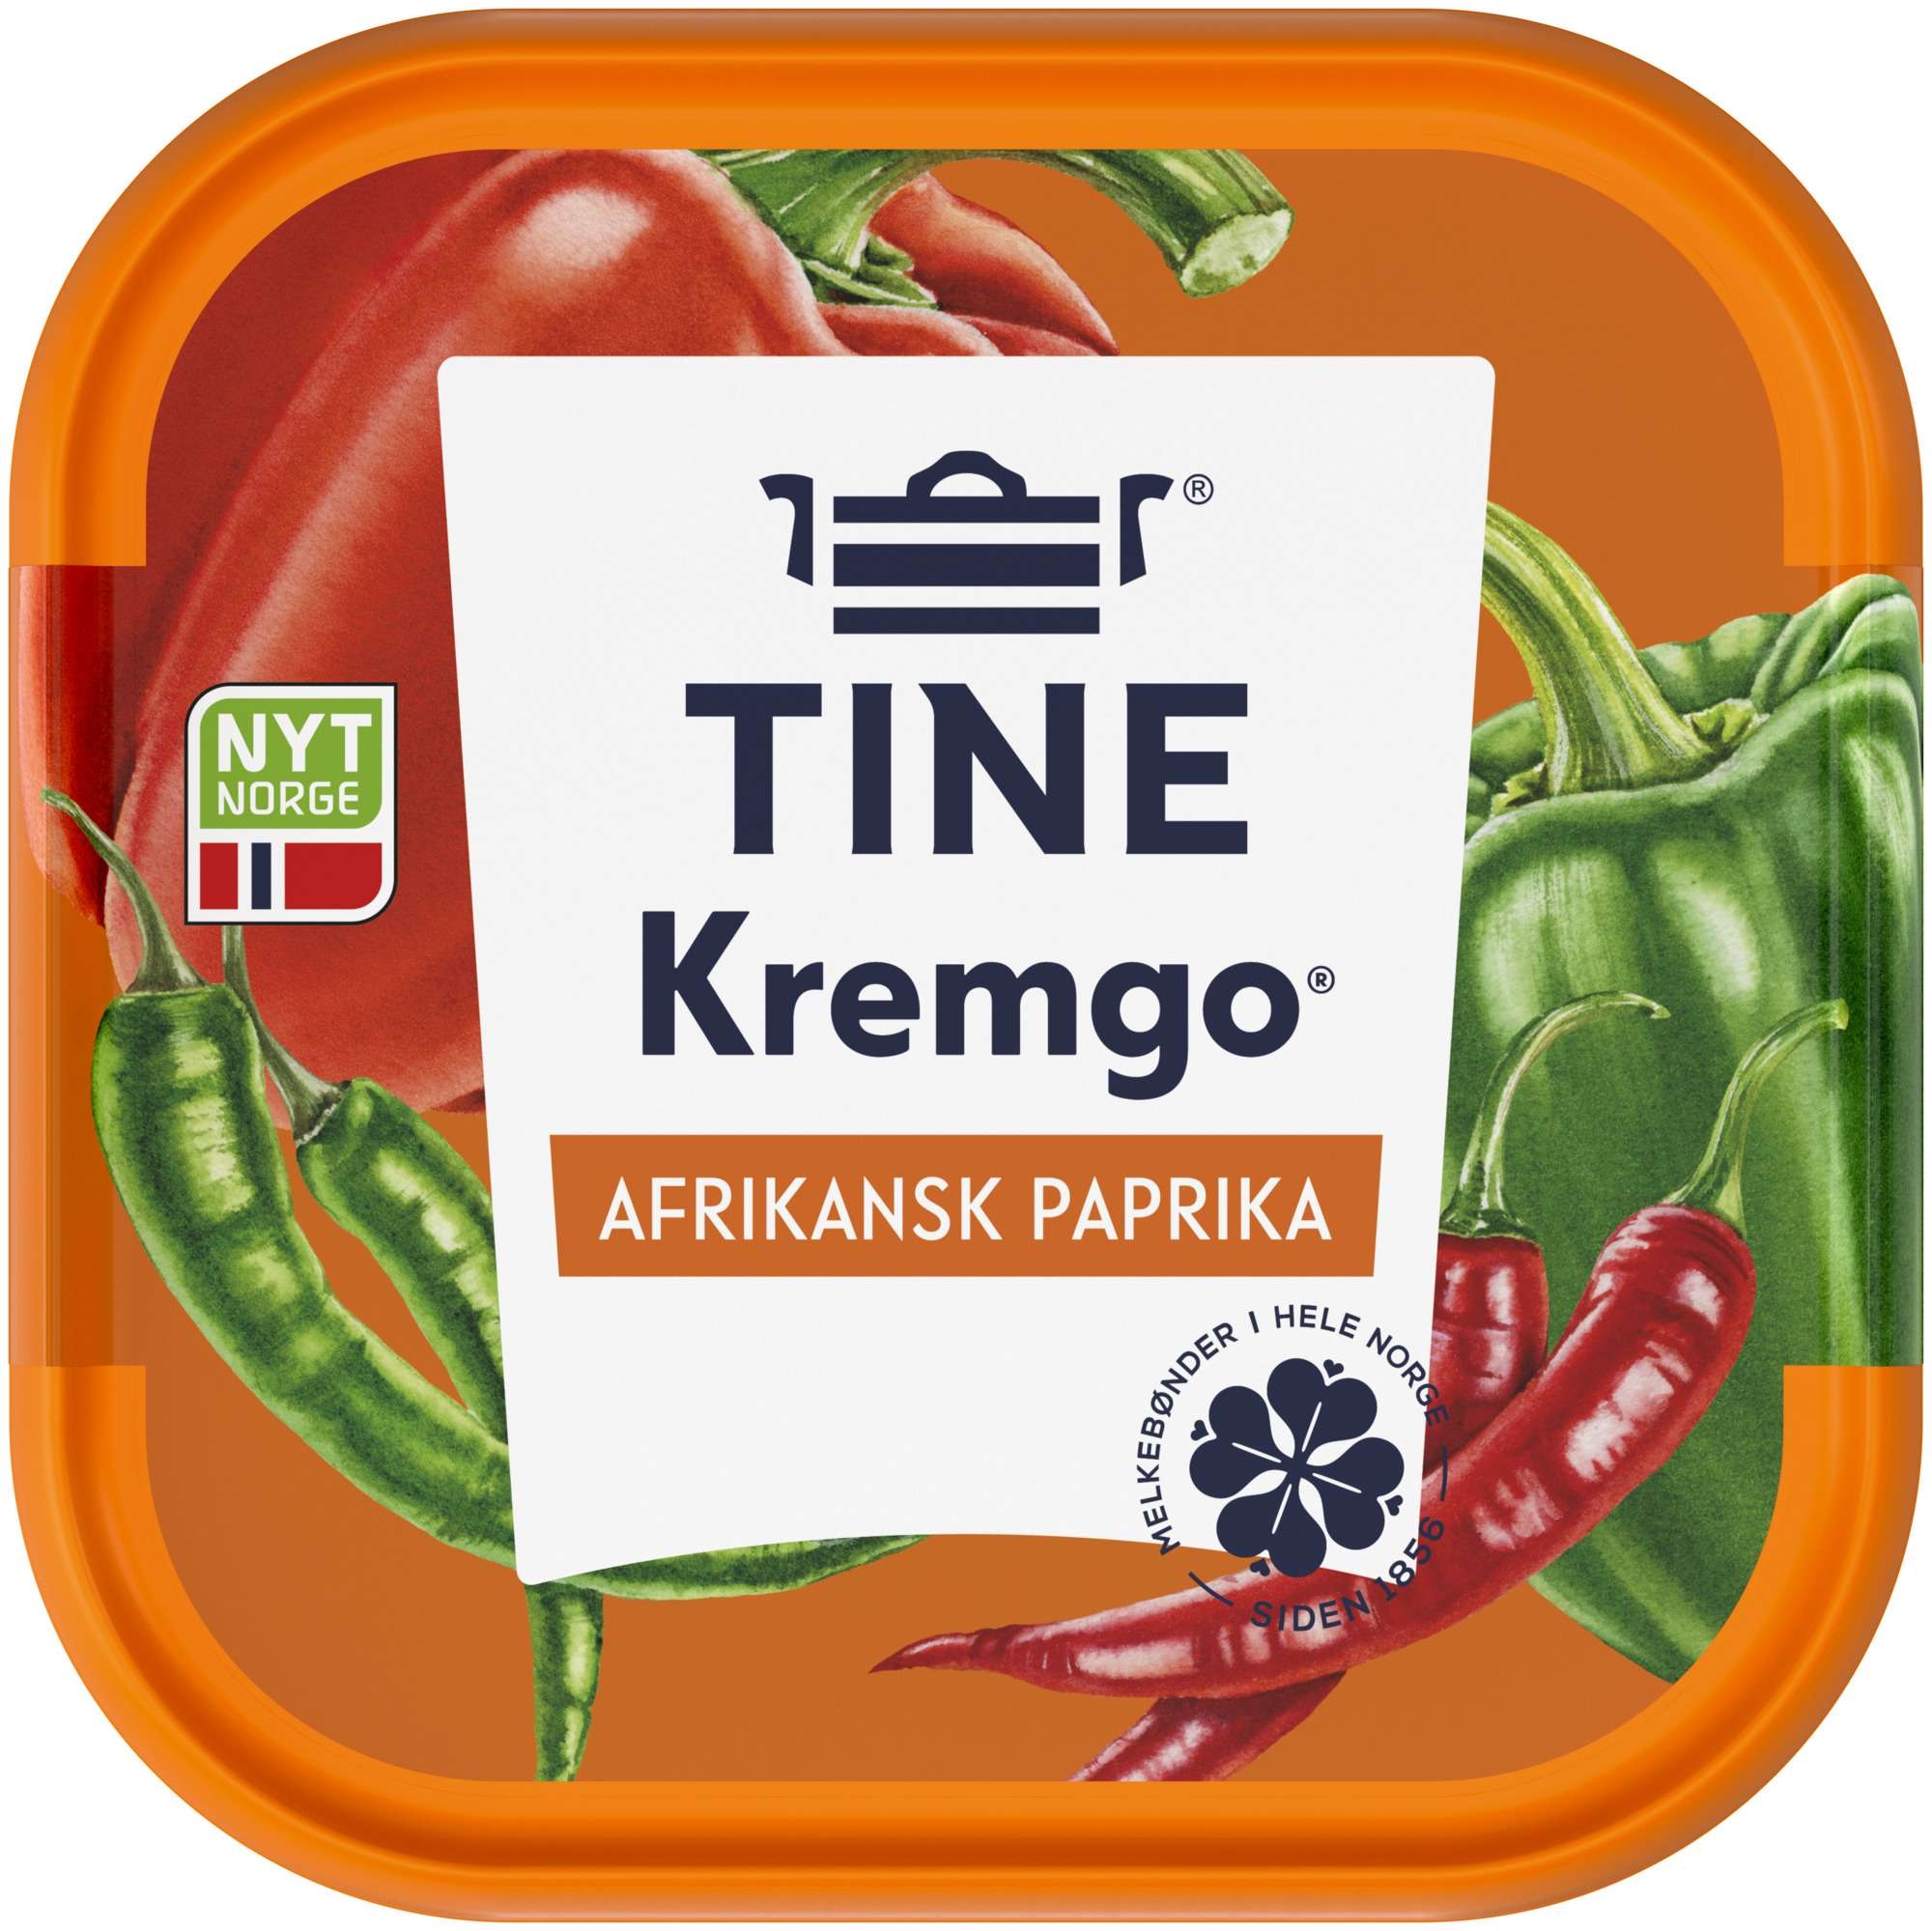 Kremgo' afrikansk paprika  125g